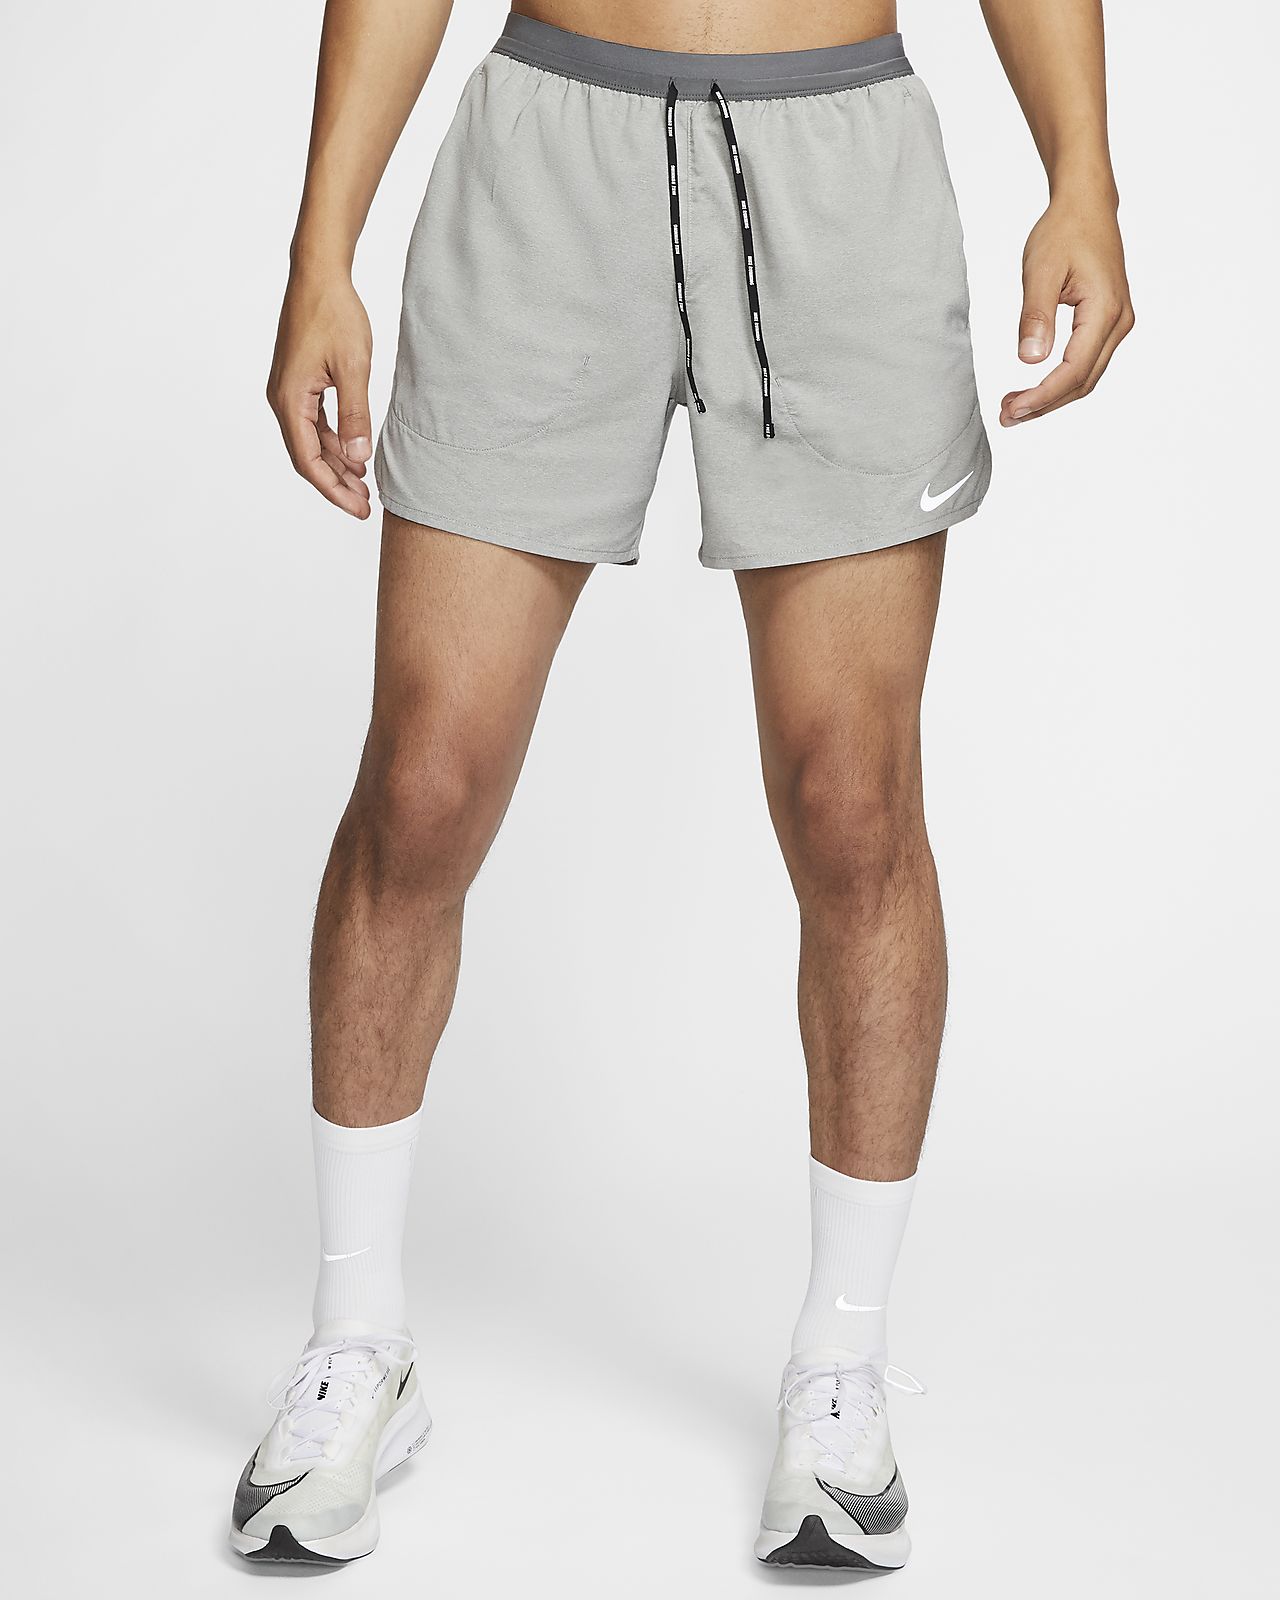 nike flex shorts grey cheap online